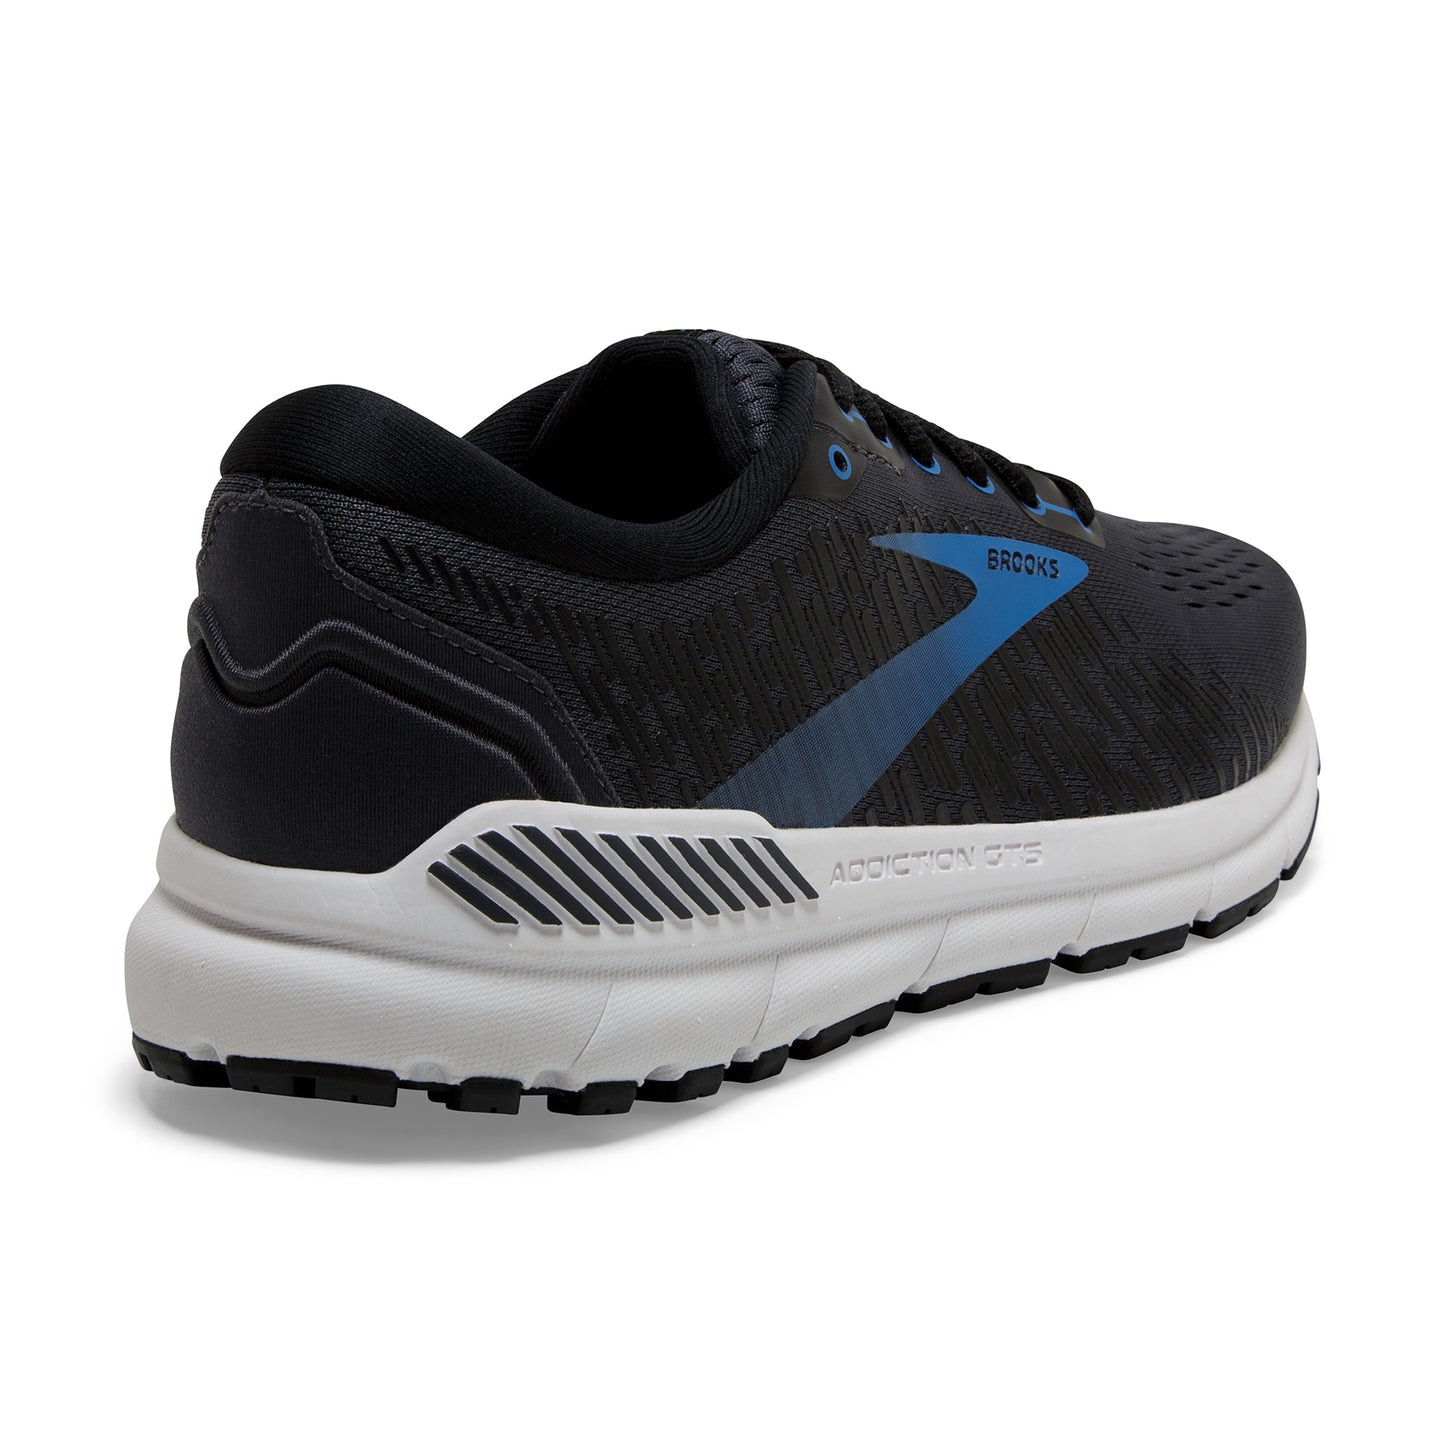 Men's Addiction GTS 15 Running Shoe - India Ink/Black/Blue - Wide (2E)